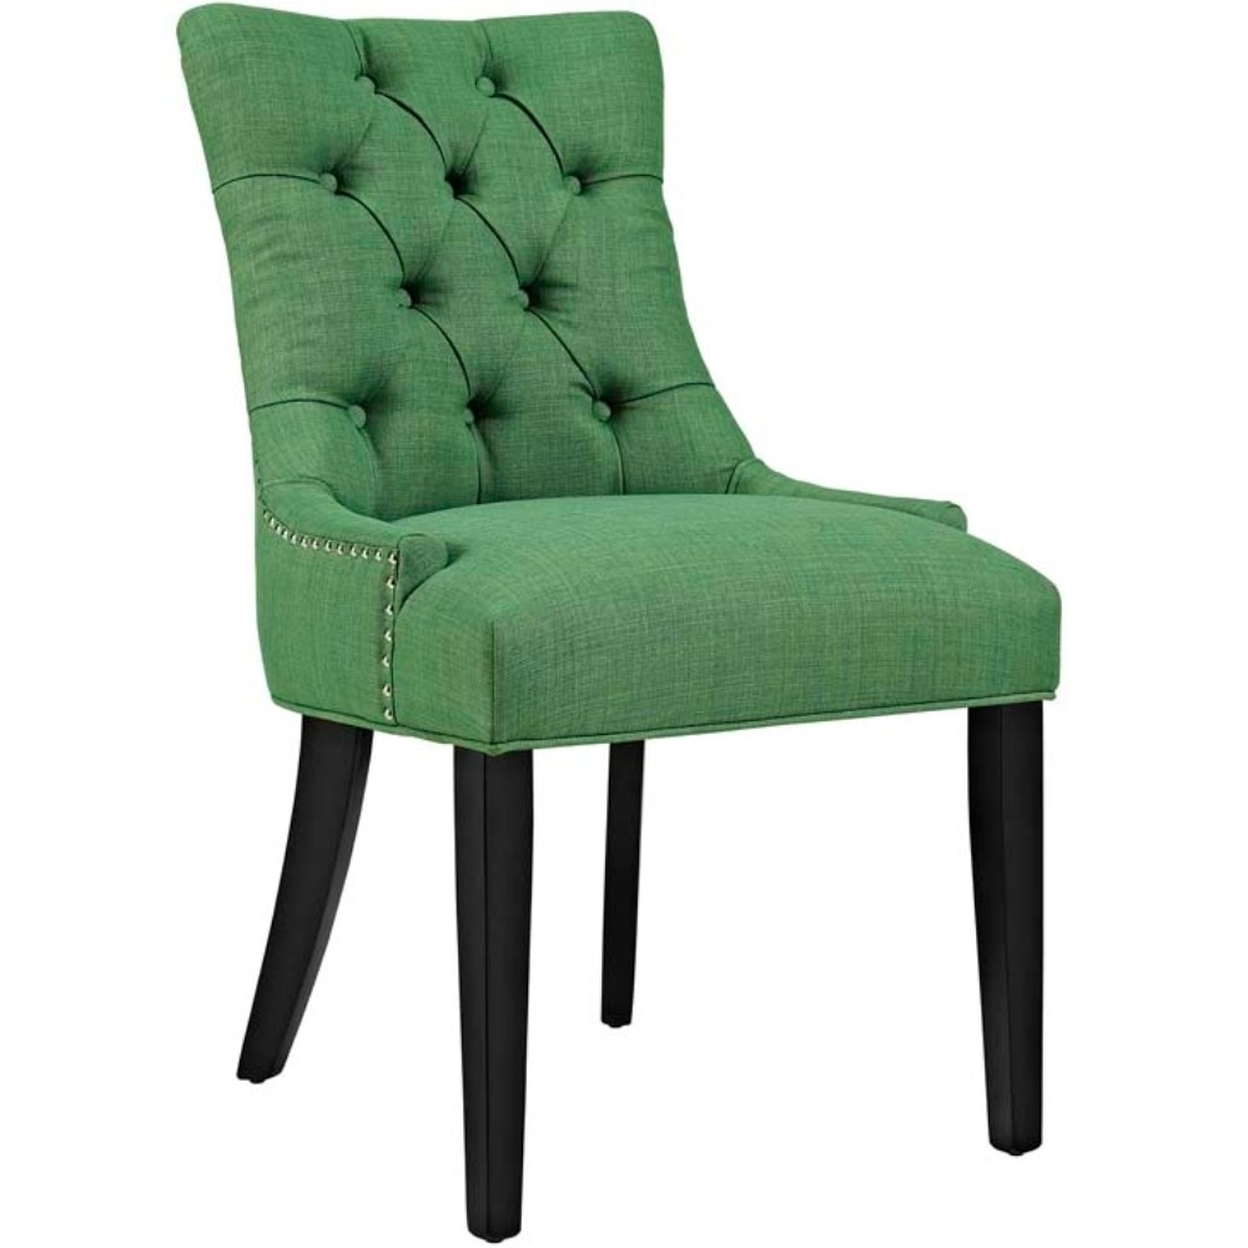 Regent Fabric Dining Chair, Kelly Green | eBay